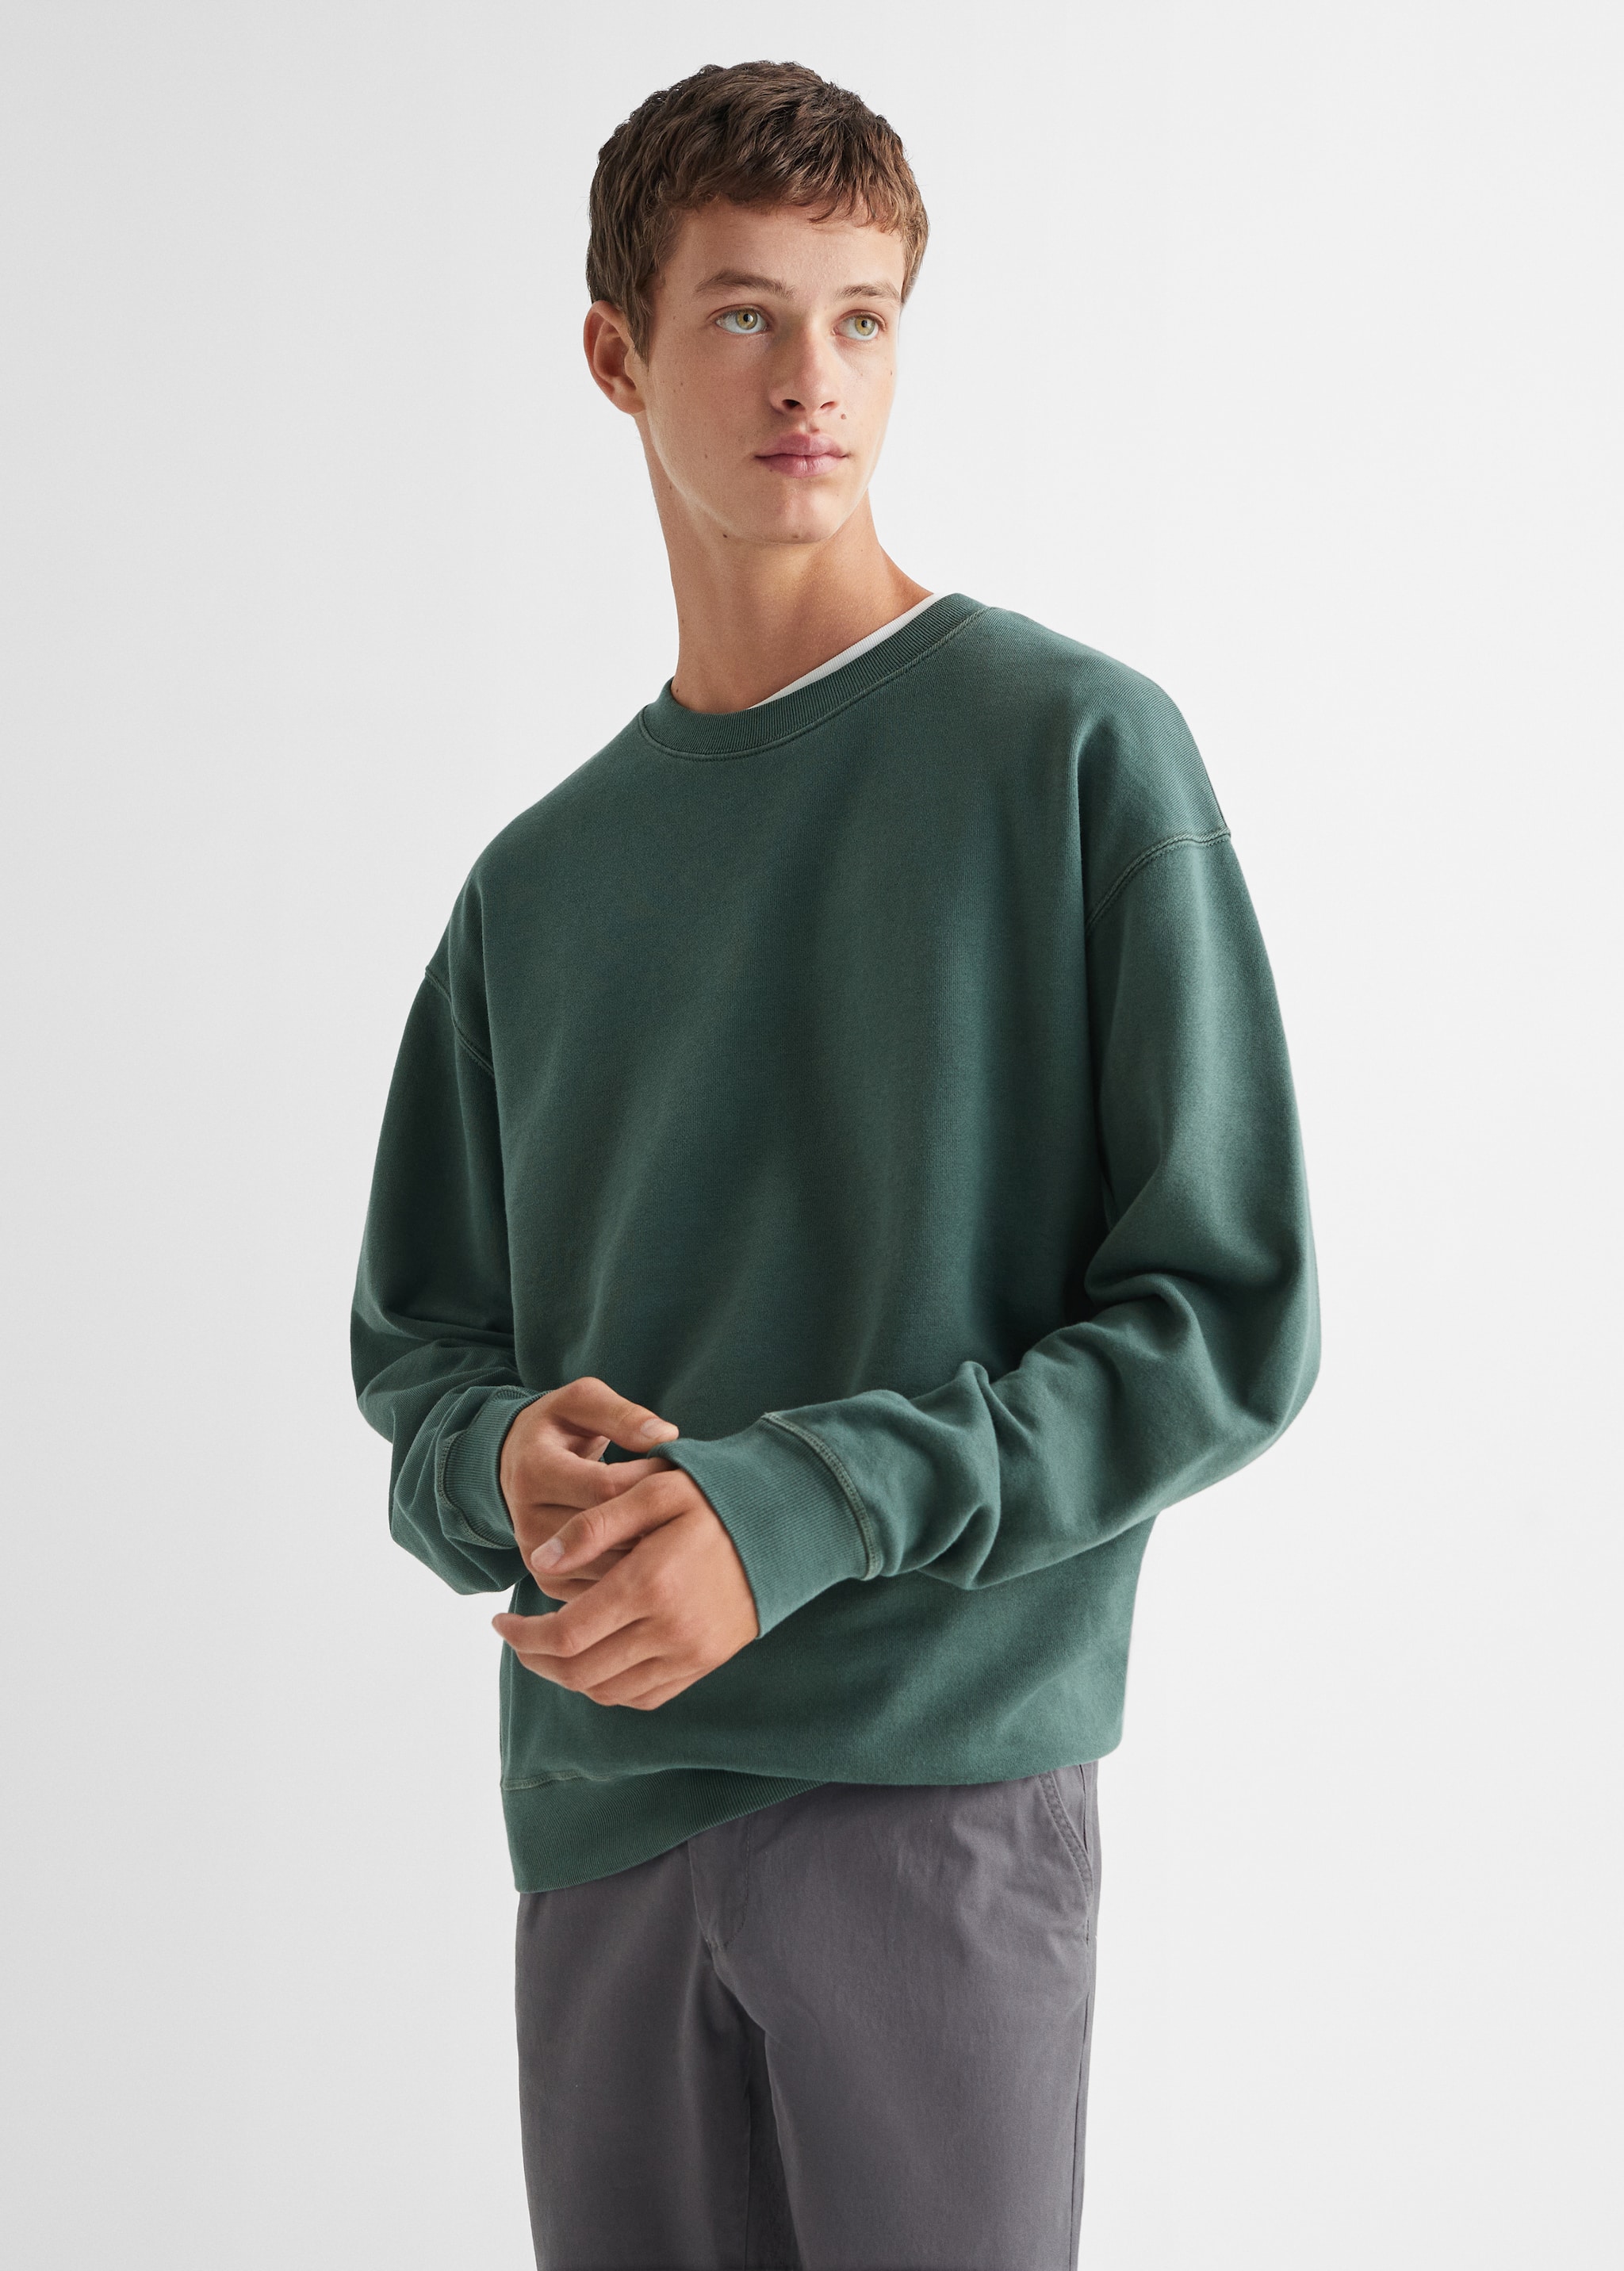 Basic cotton sweater - Medium plane